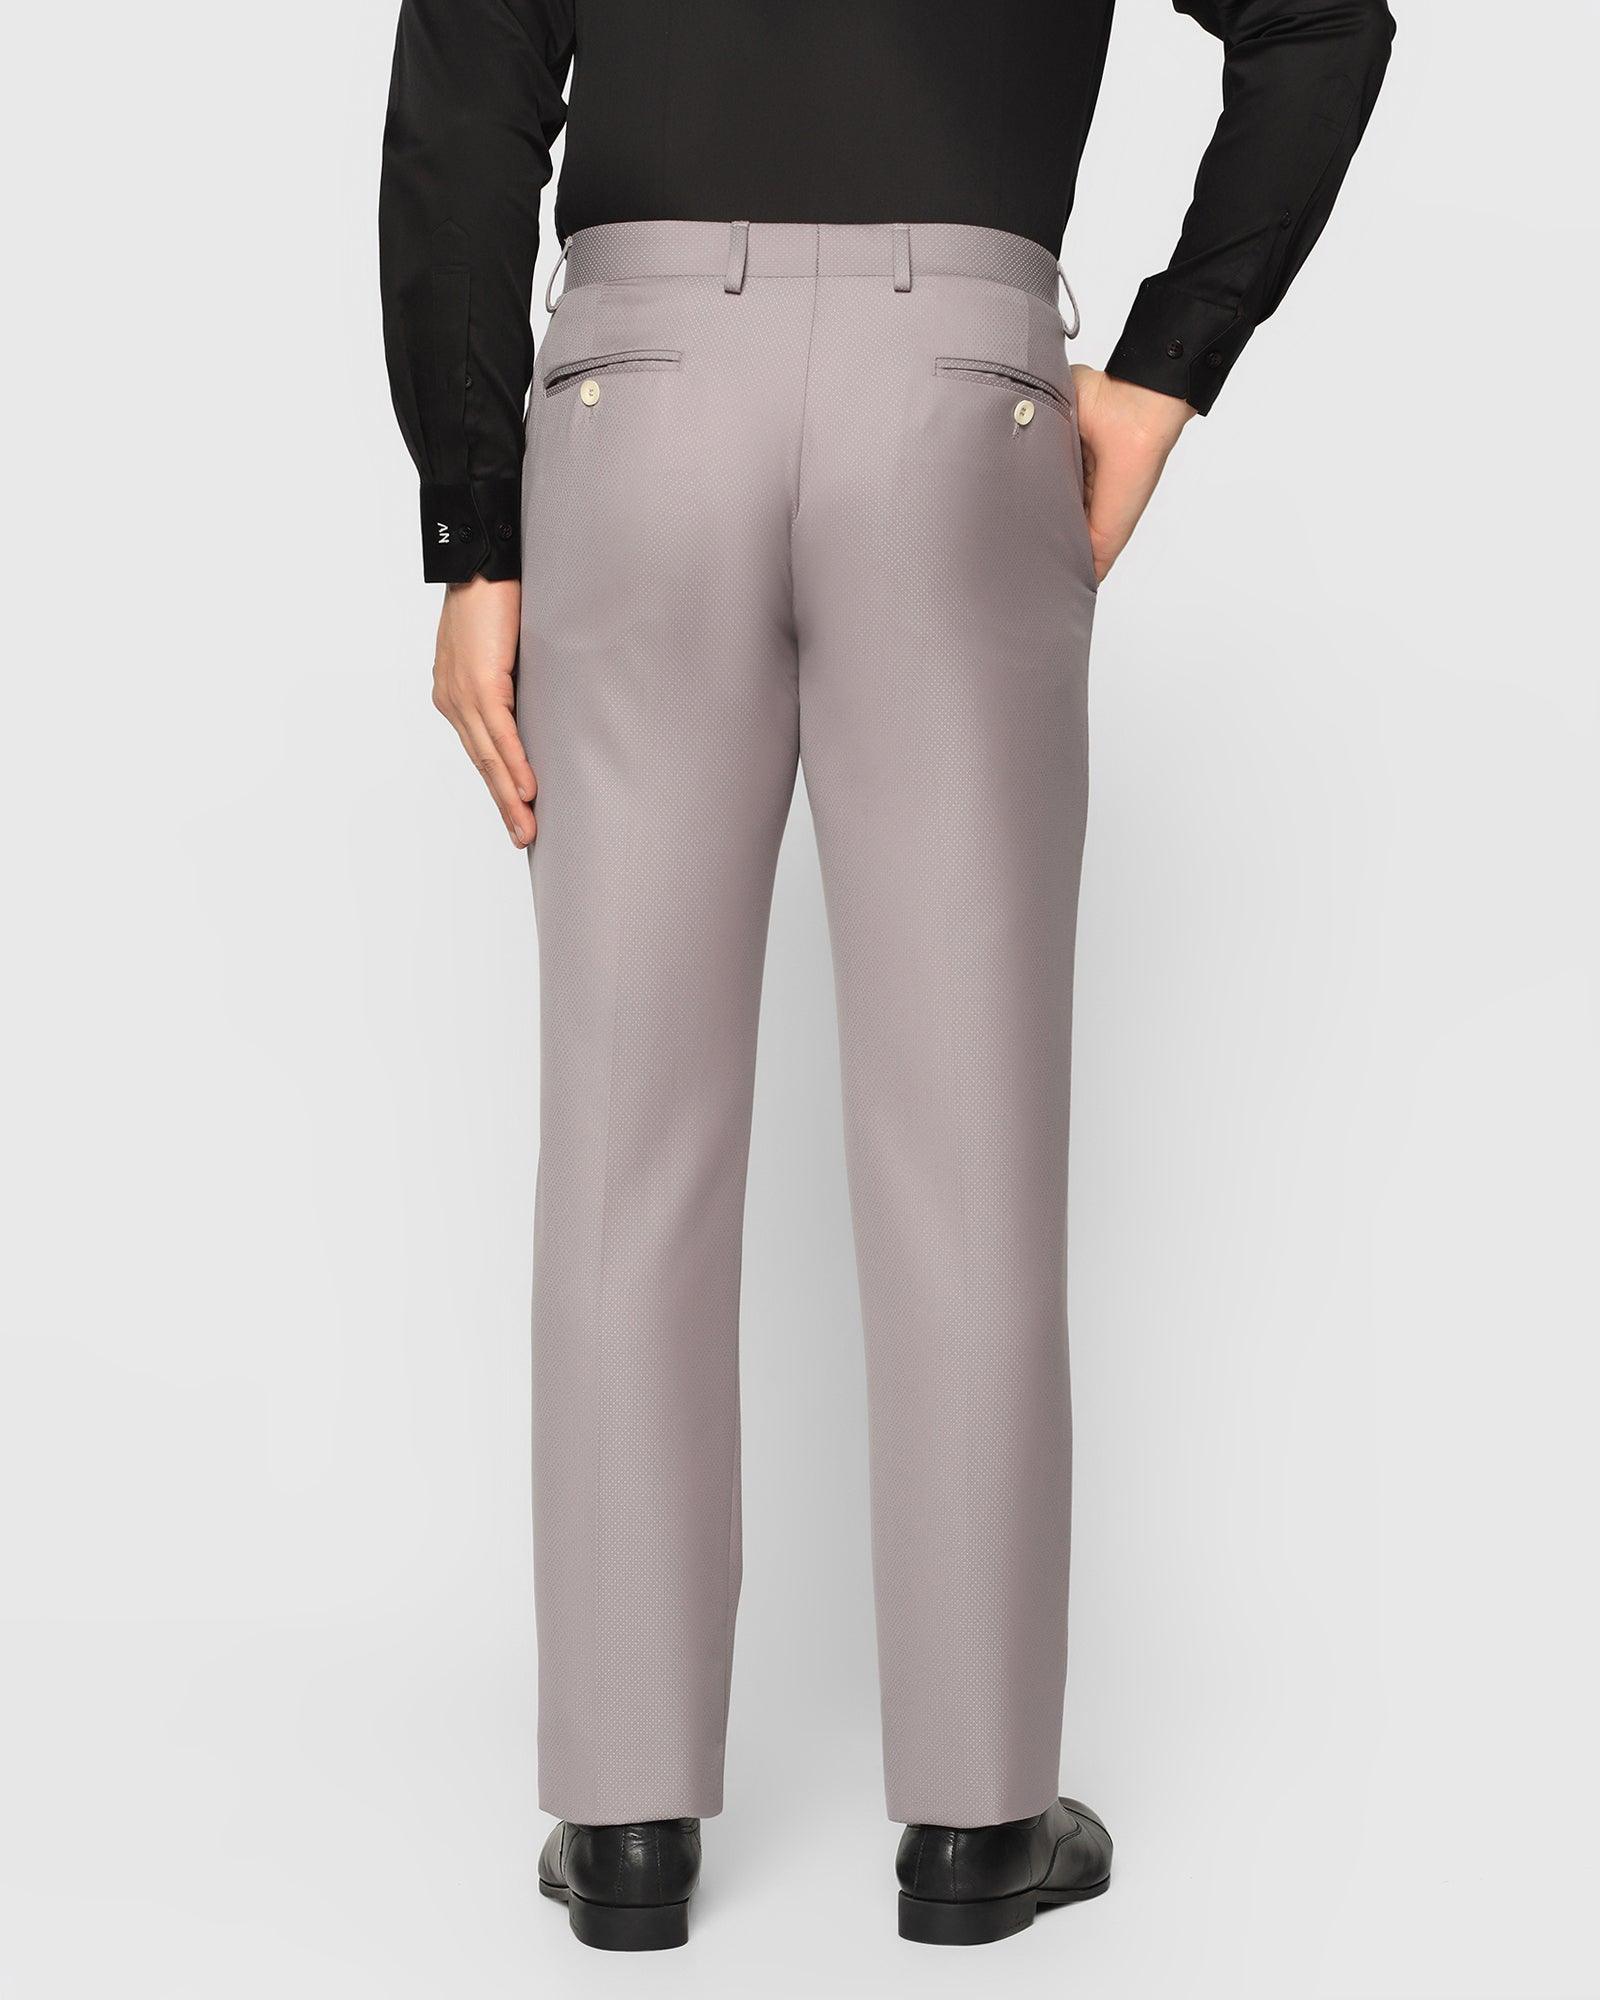 Slim Comfort B-95 Formal Light Grey Textured Trouser - Cairo